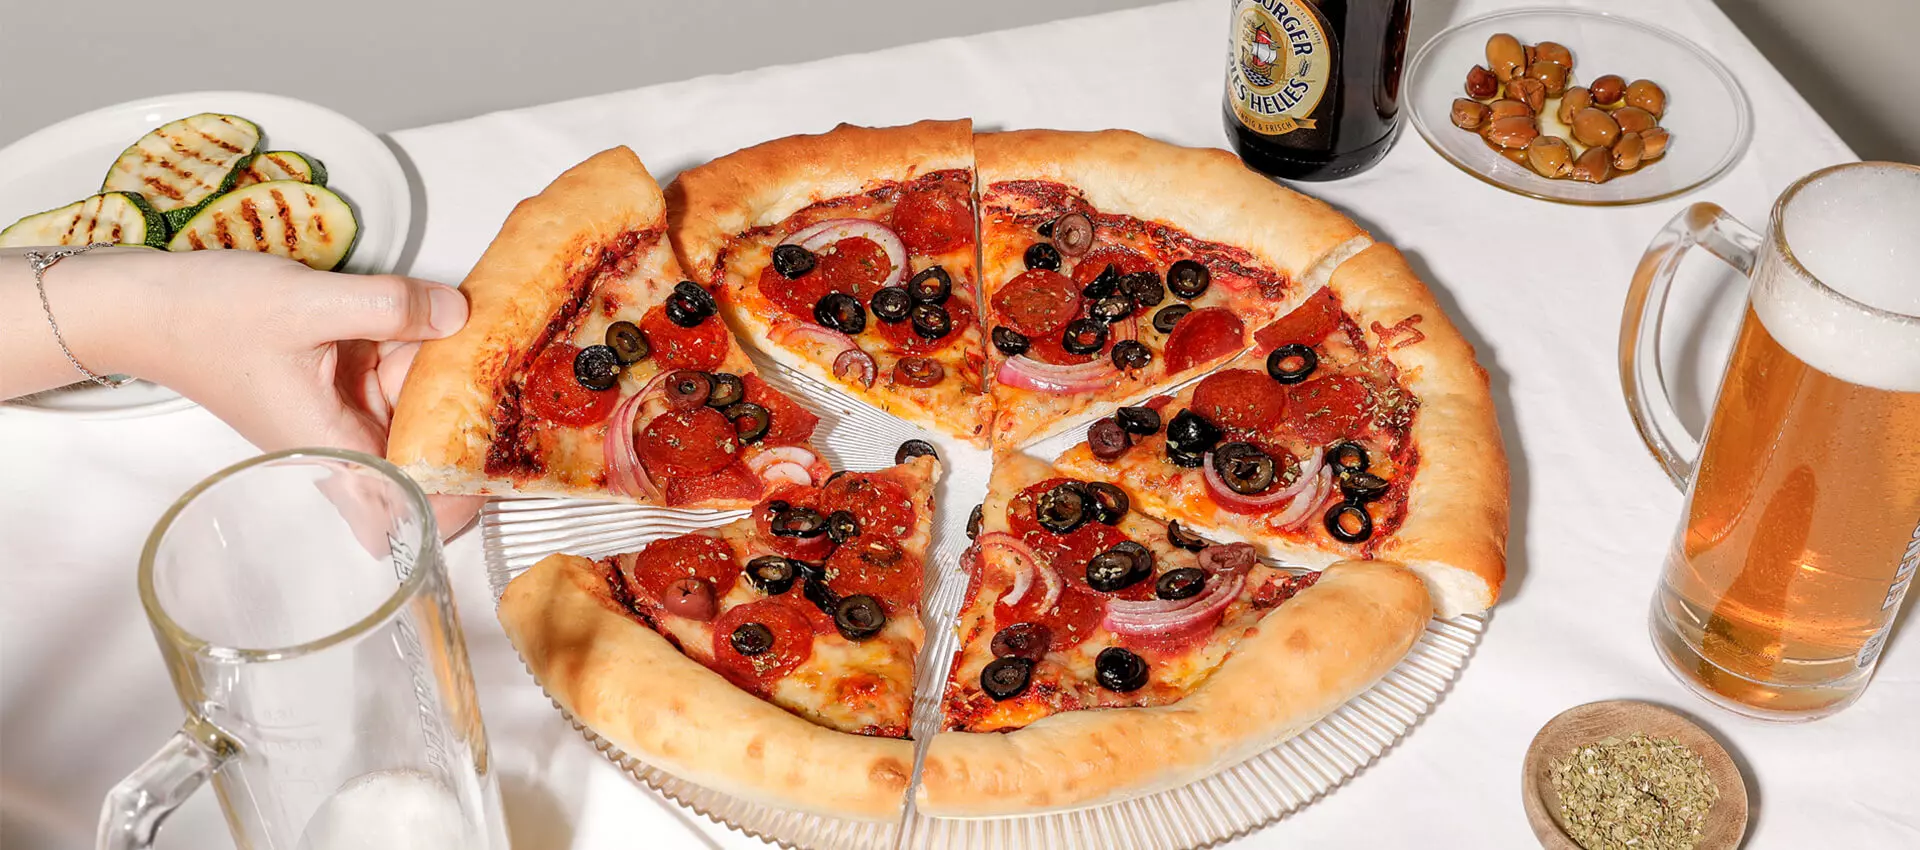 Peperoni Pizza, mit Oliven und zwei FLENS Edles Helles.